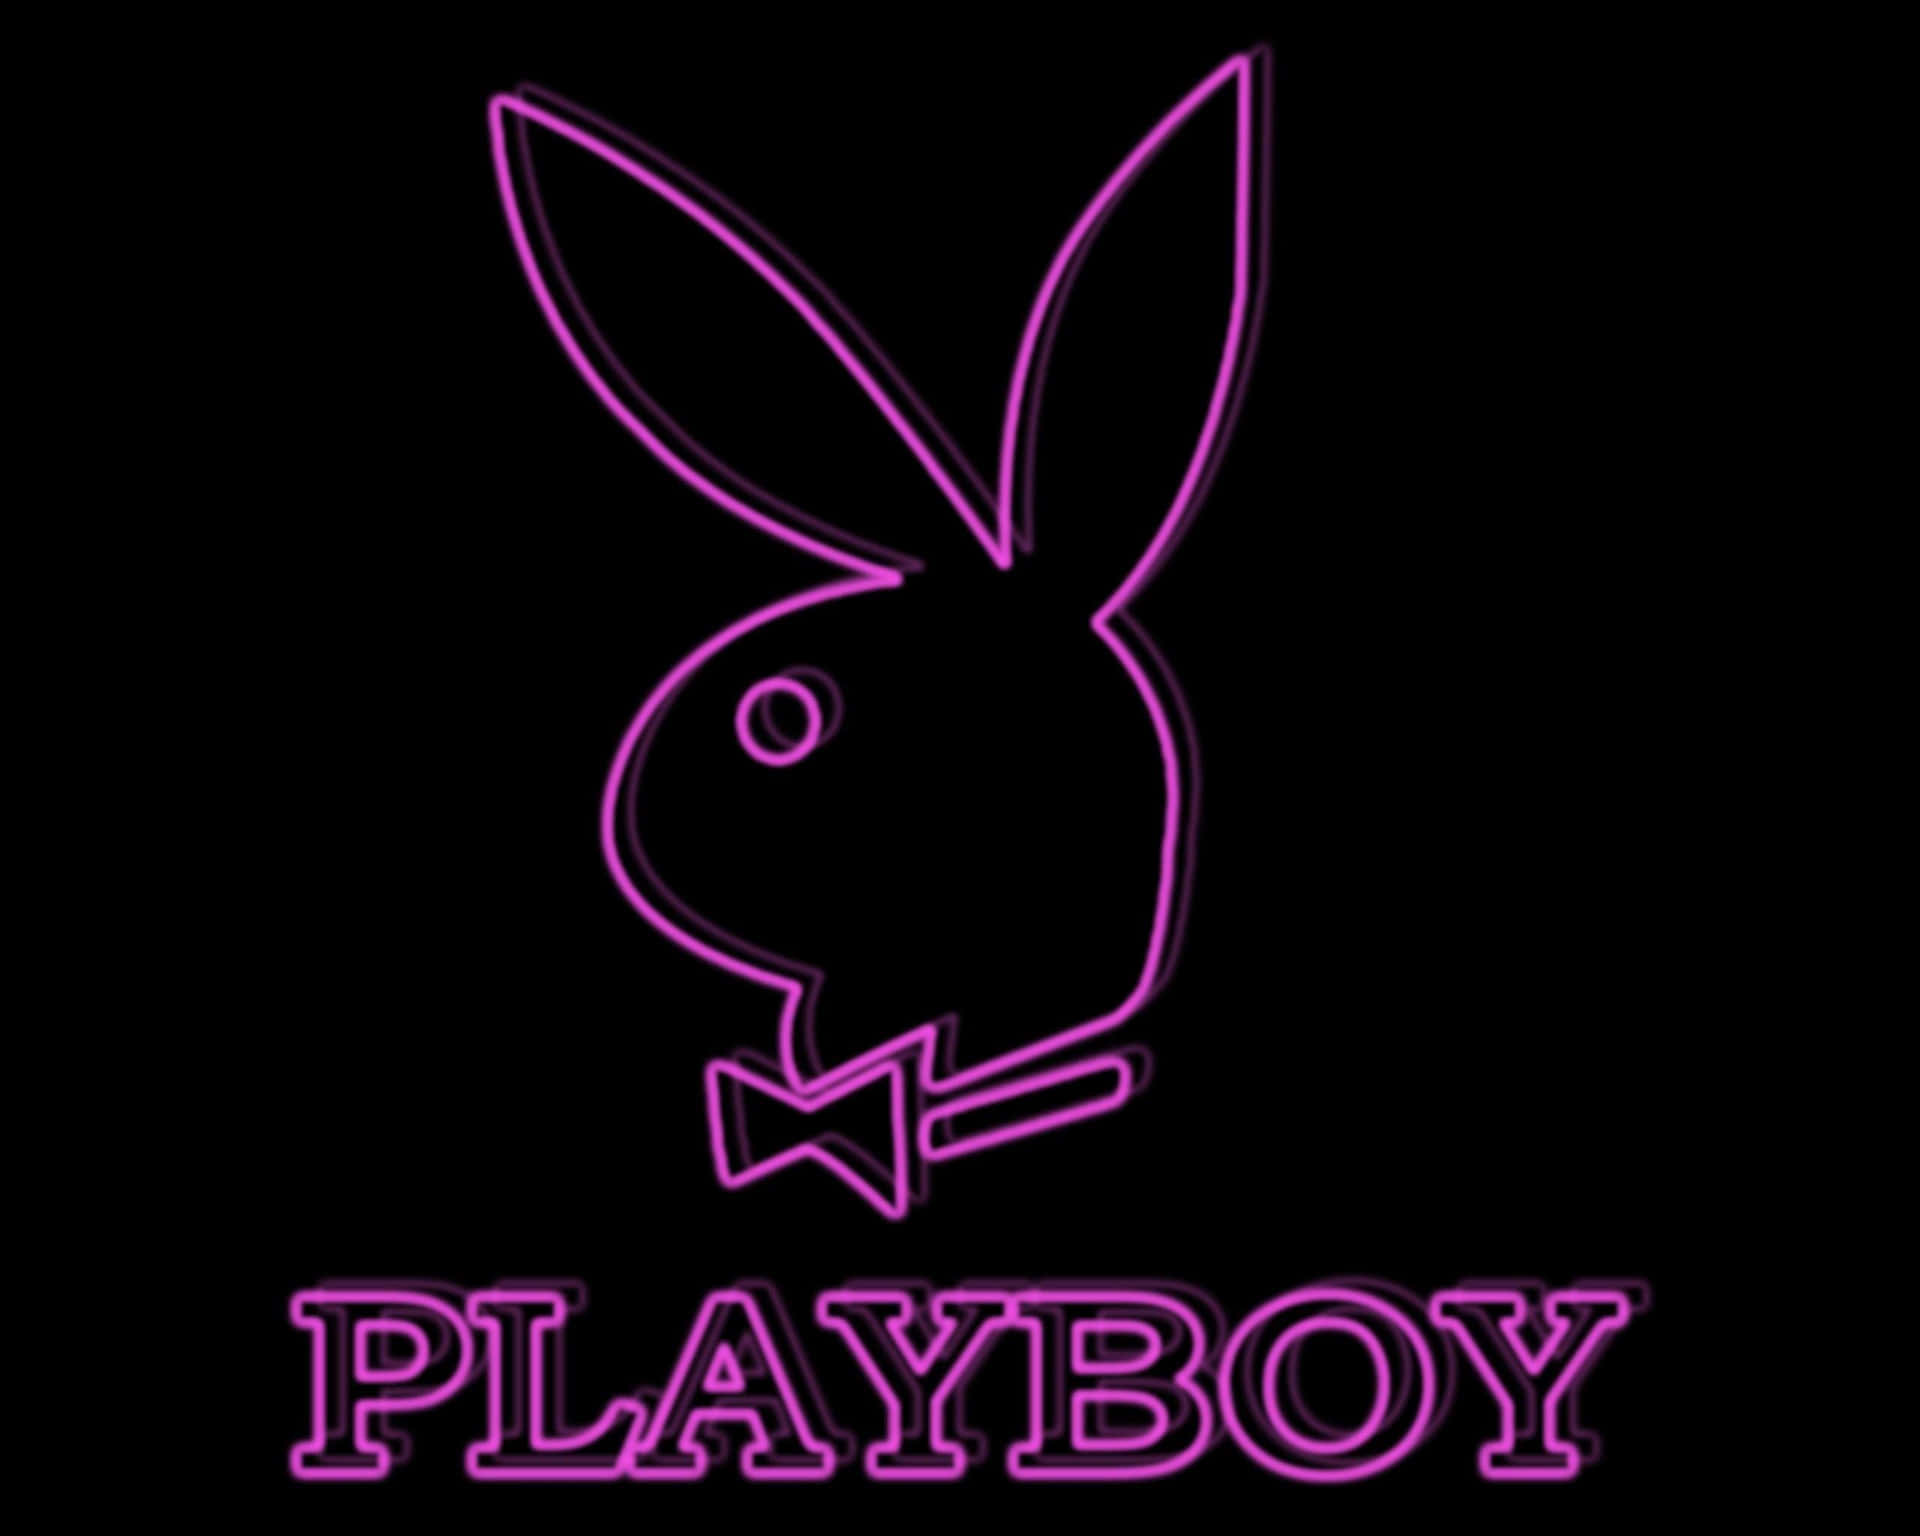 "Playboy--Celebrating Iconic Men and Women Around the World"